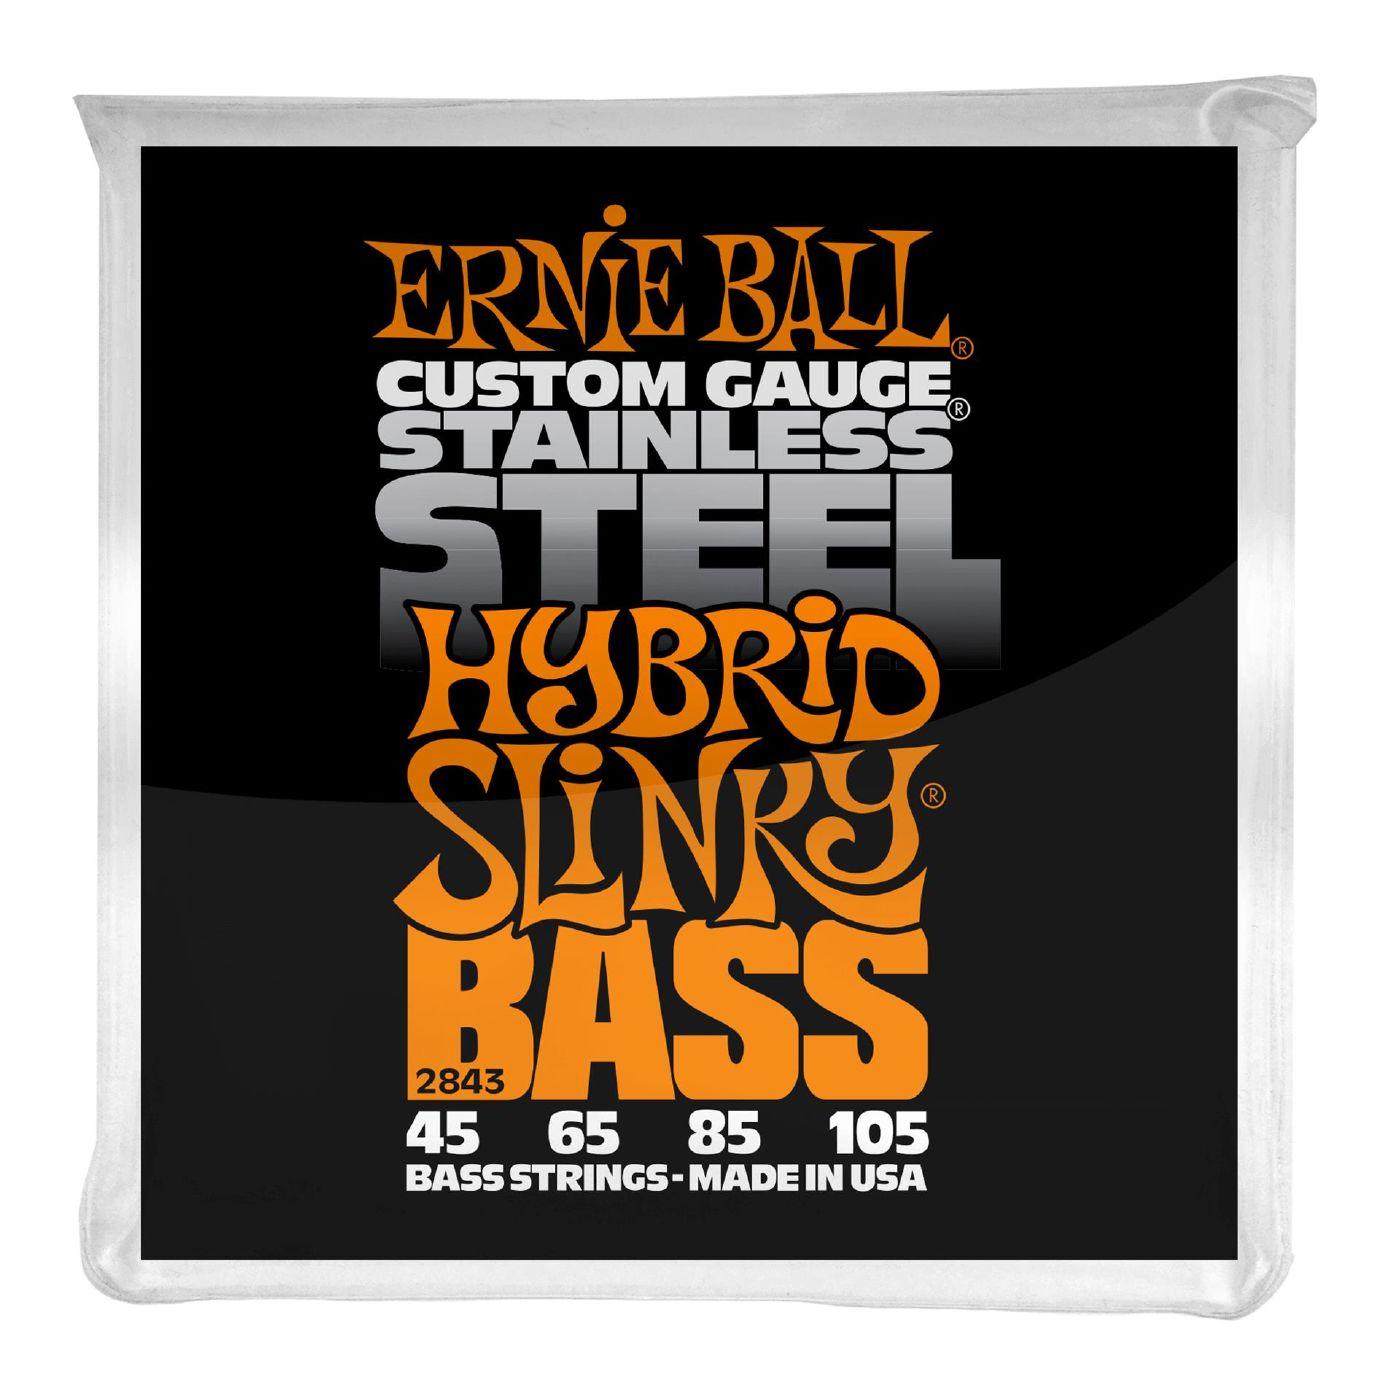 Ernie Ball - Bass Guitar Strings Set STEEL 45/105 Hybrid Slinky Orange - Strings - Bass by Ernie Ball at Muso's Stuff